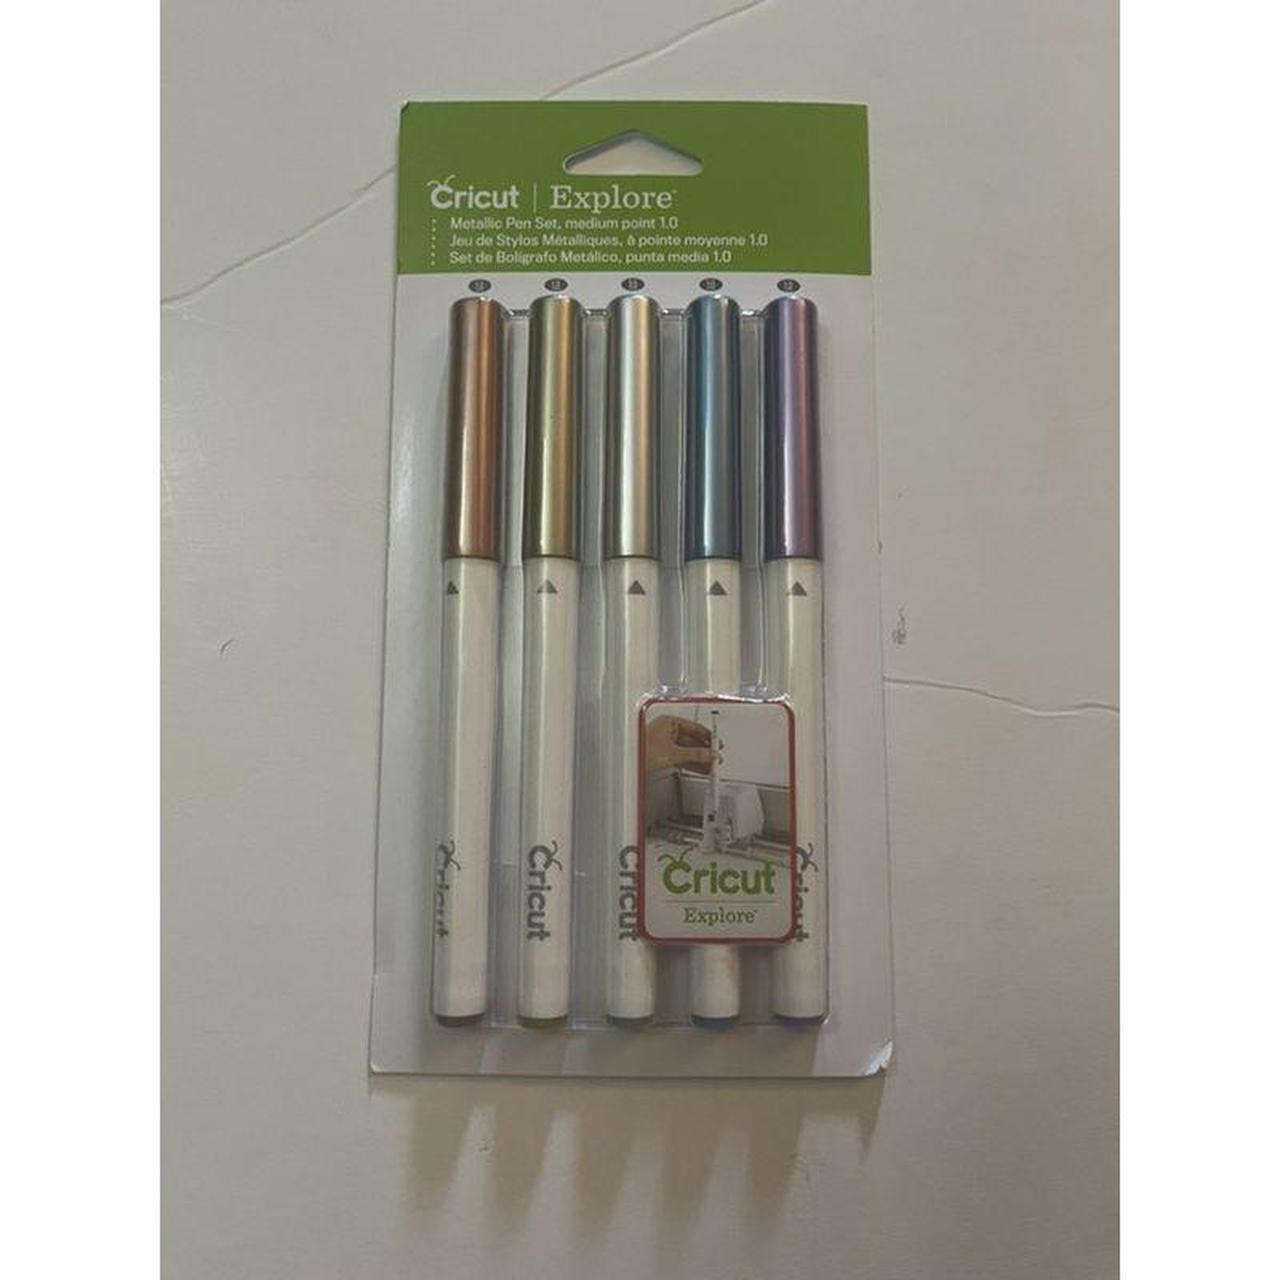 Cricut Medium Point Pen Set Metallic